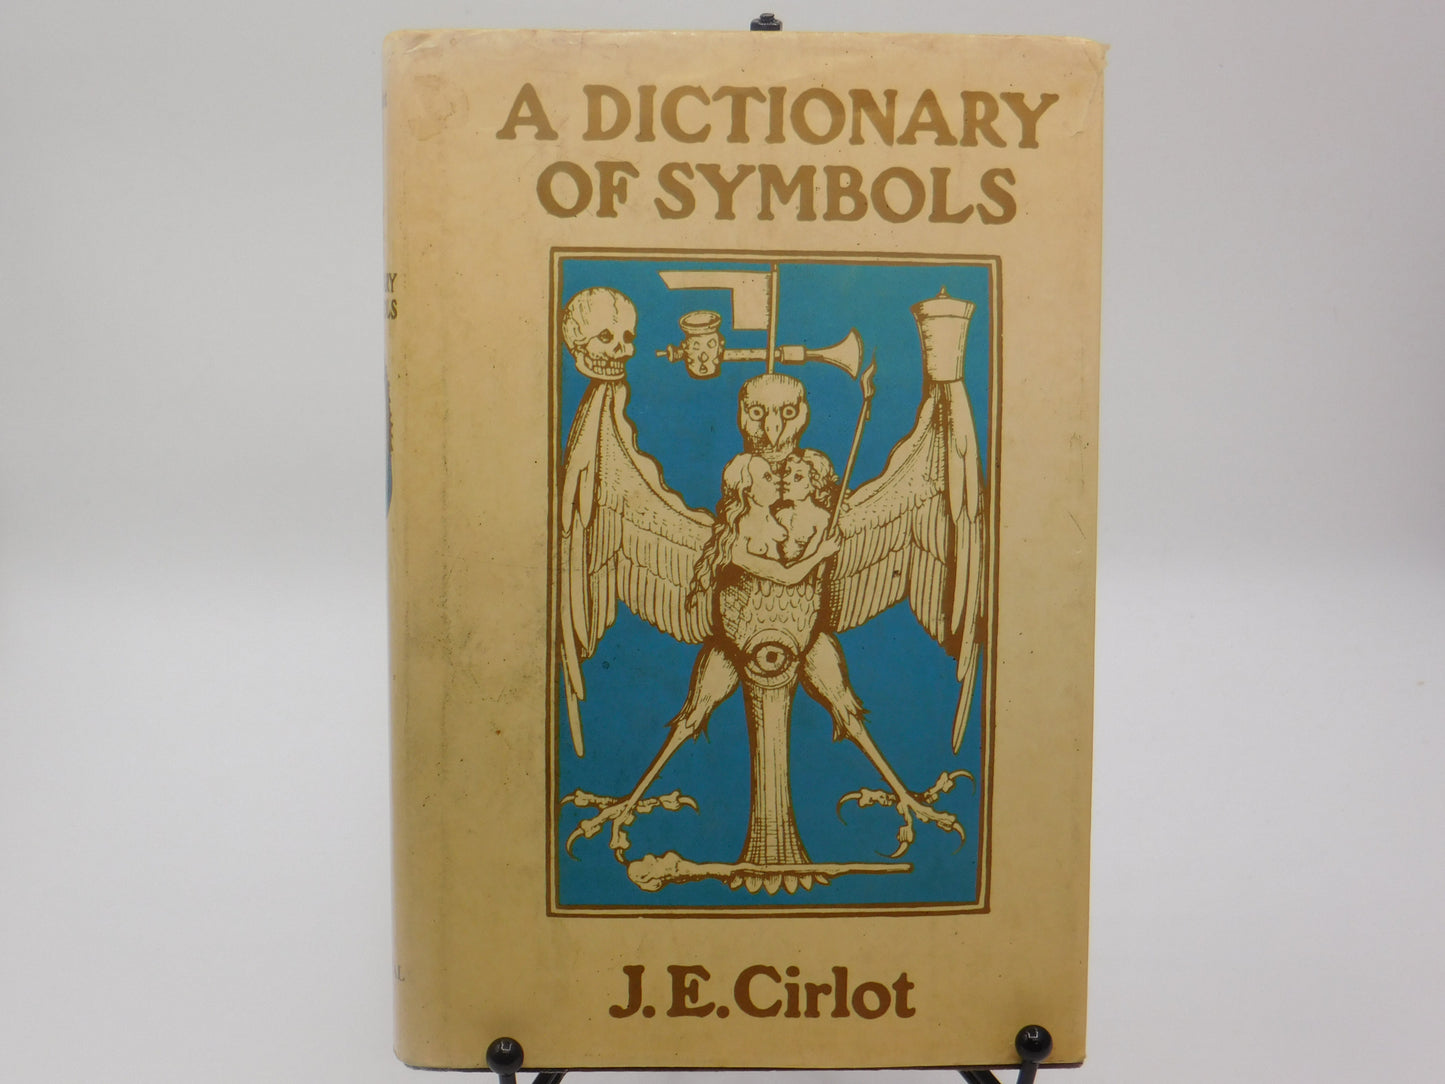 A Dictionary of Symbols by J.E. Cirlot